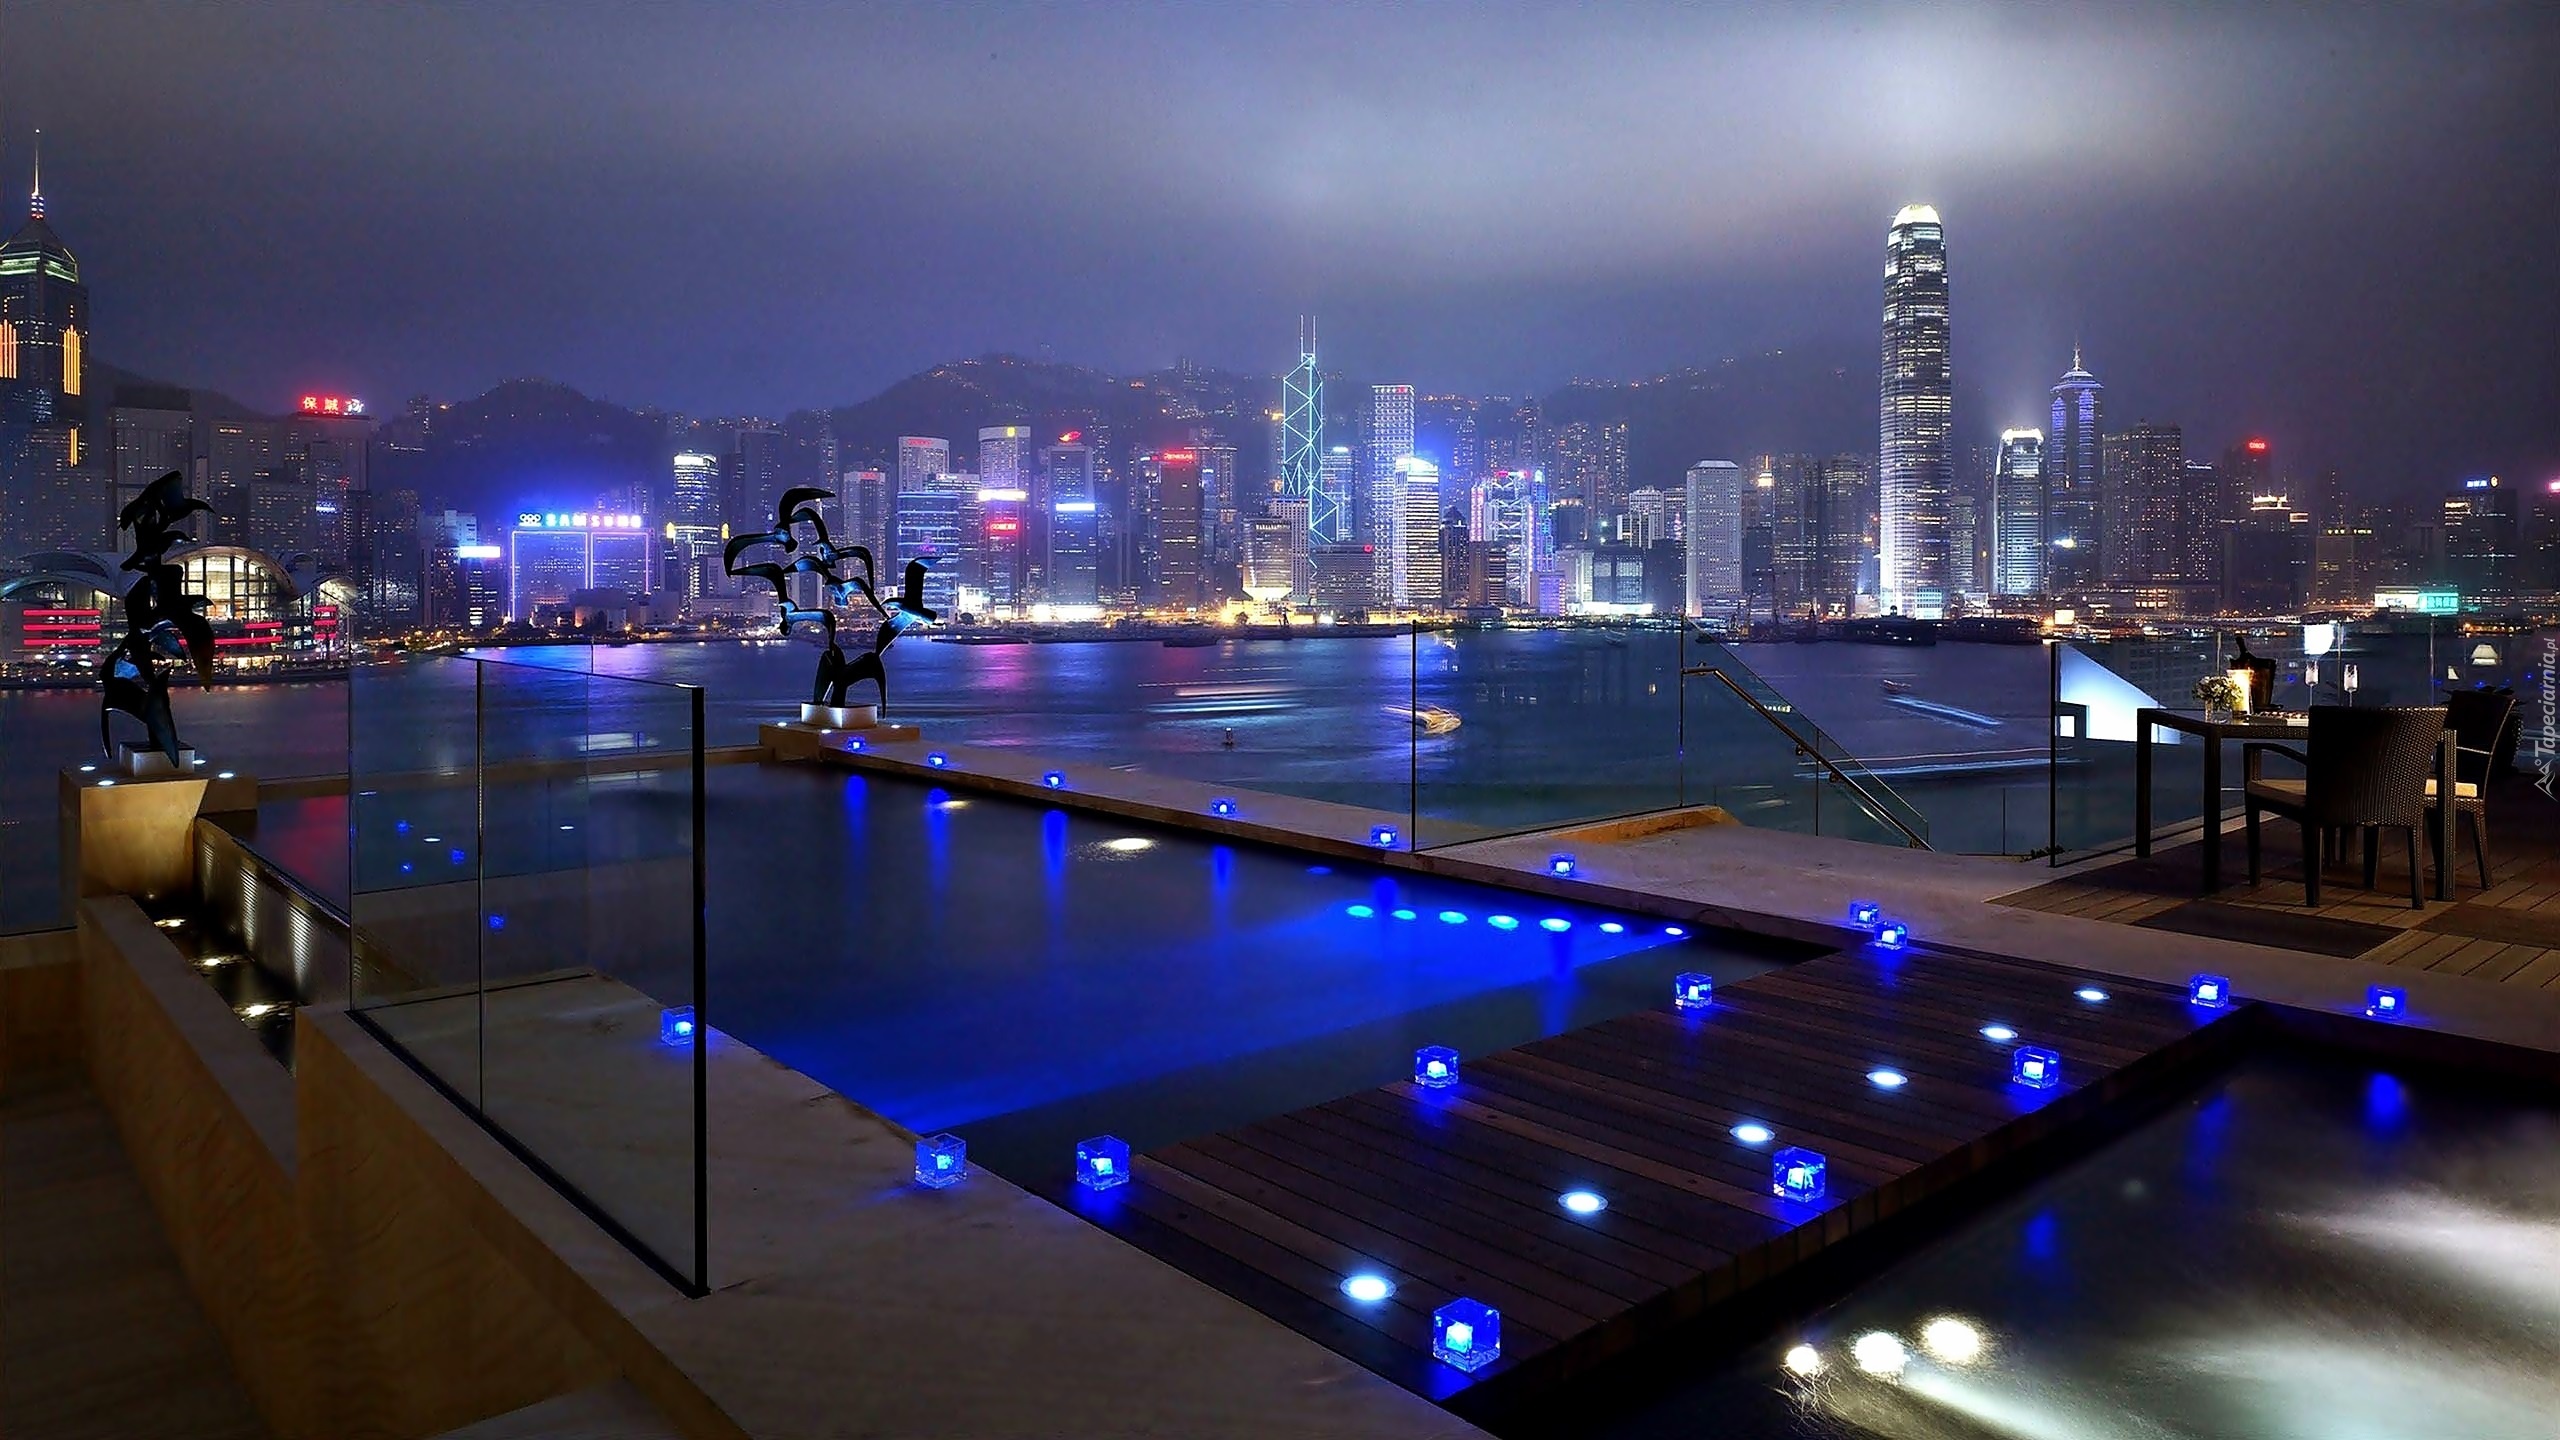 Drapacze, Chmur, Hotel, Intercontinental, Hong Kong, Fragment, Miasta, Nocą